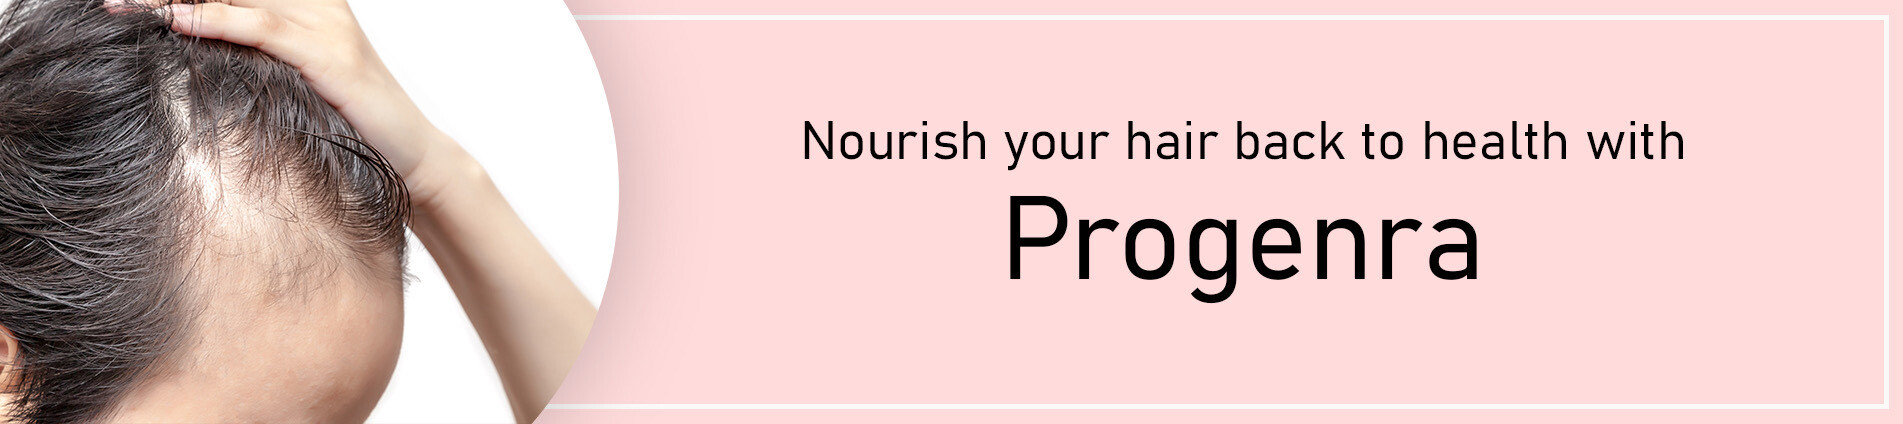 progenra hair treatment